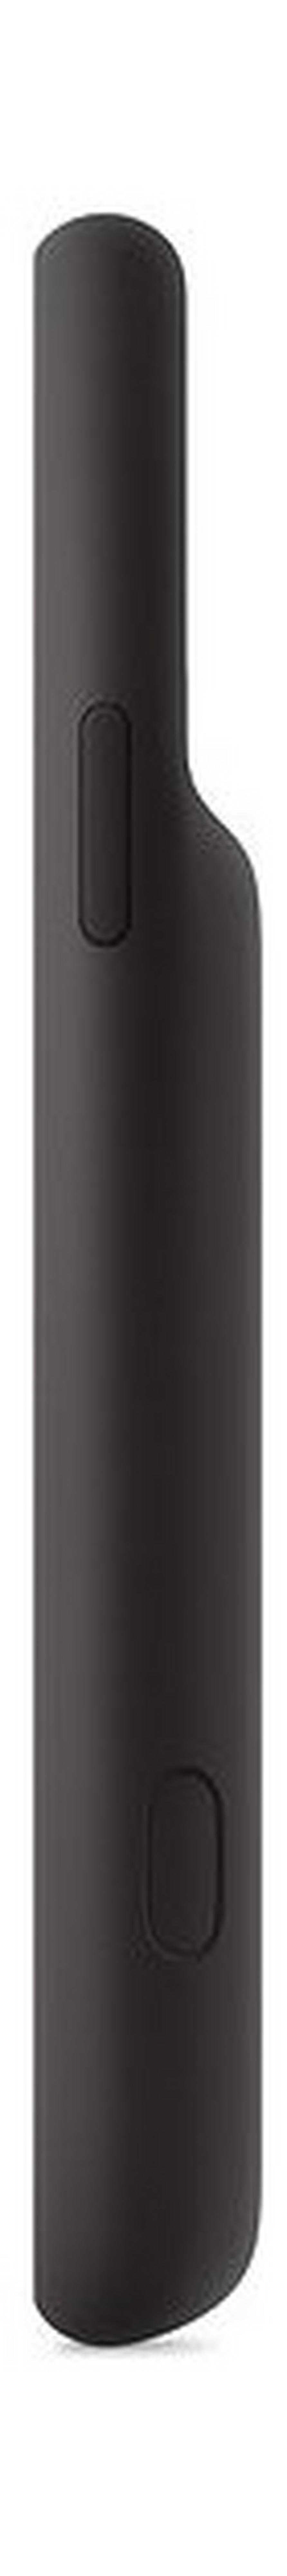 Apple iPhone 11 Pro Smart Battery Case - Black